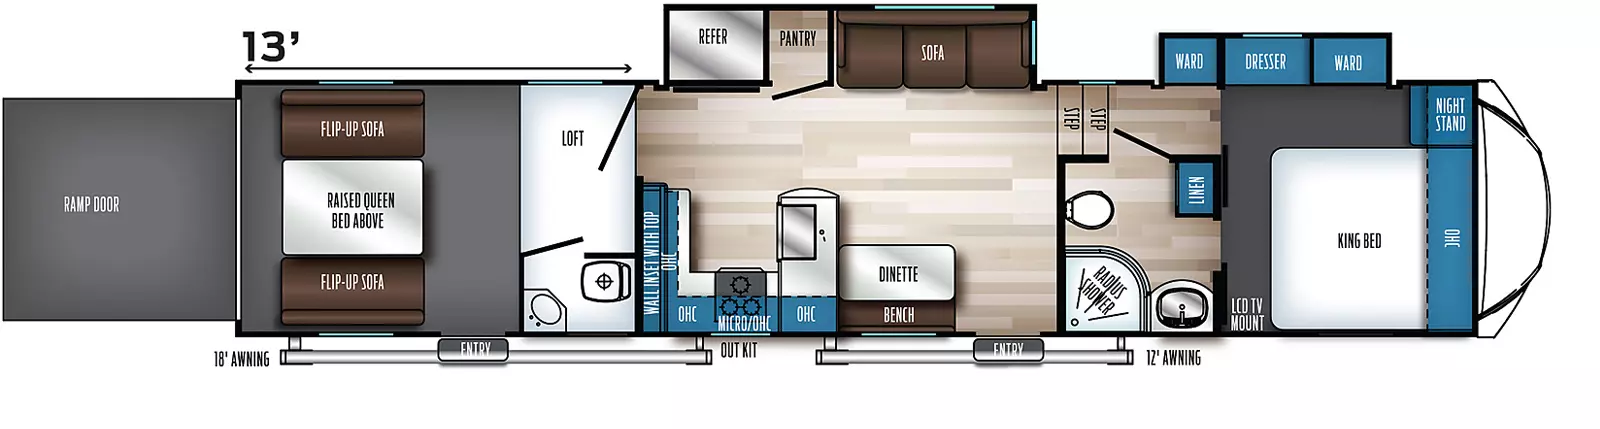 371A13 Floorplan Image